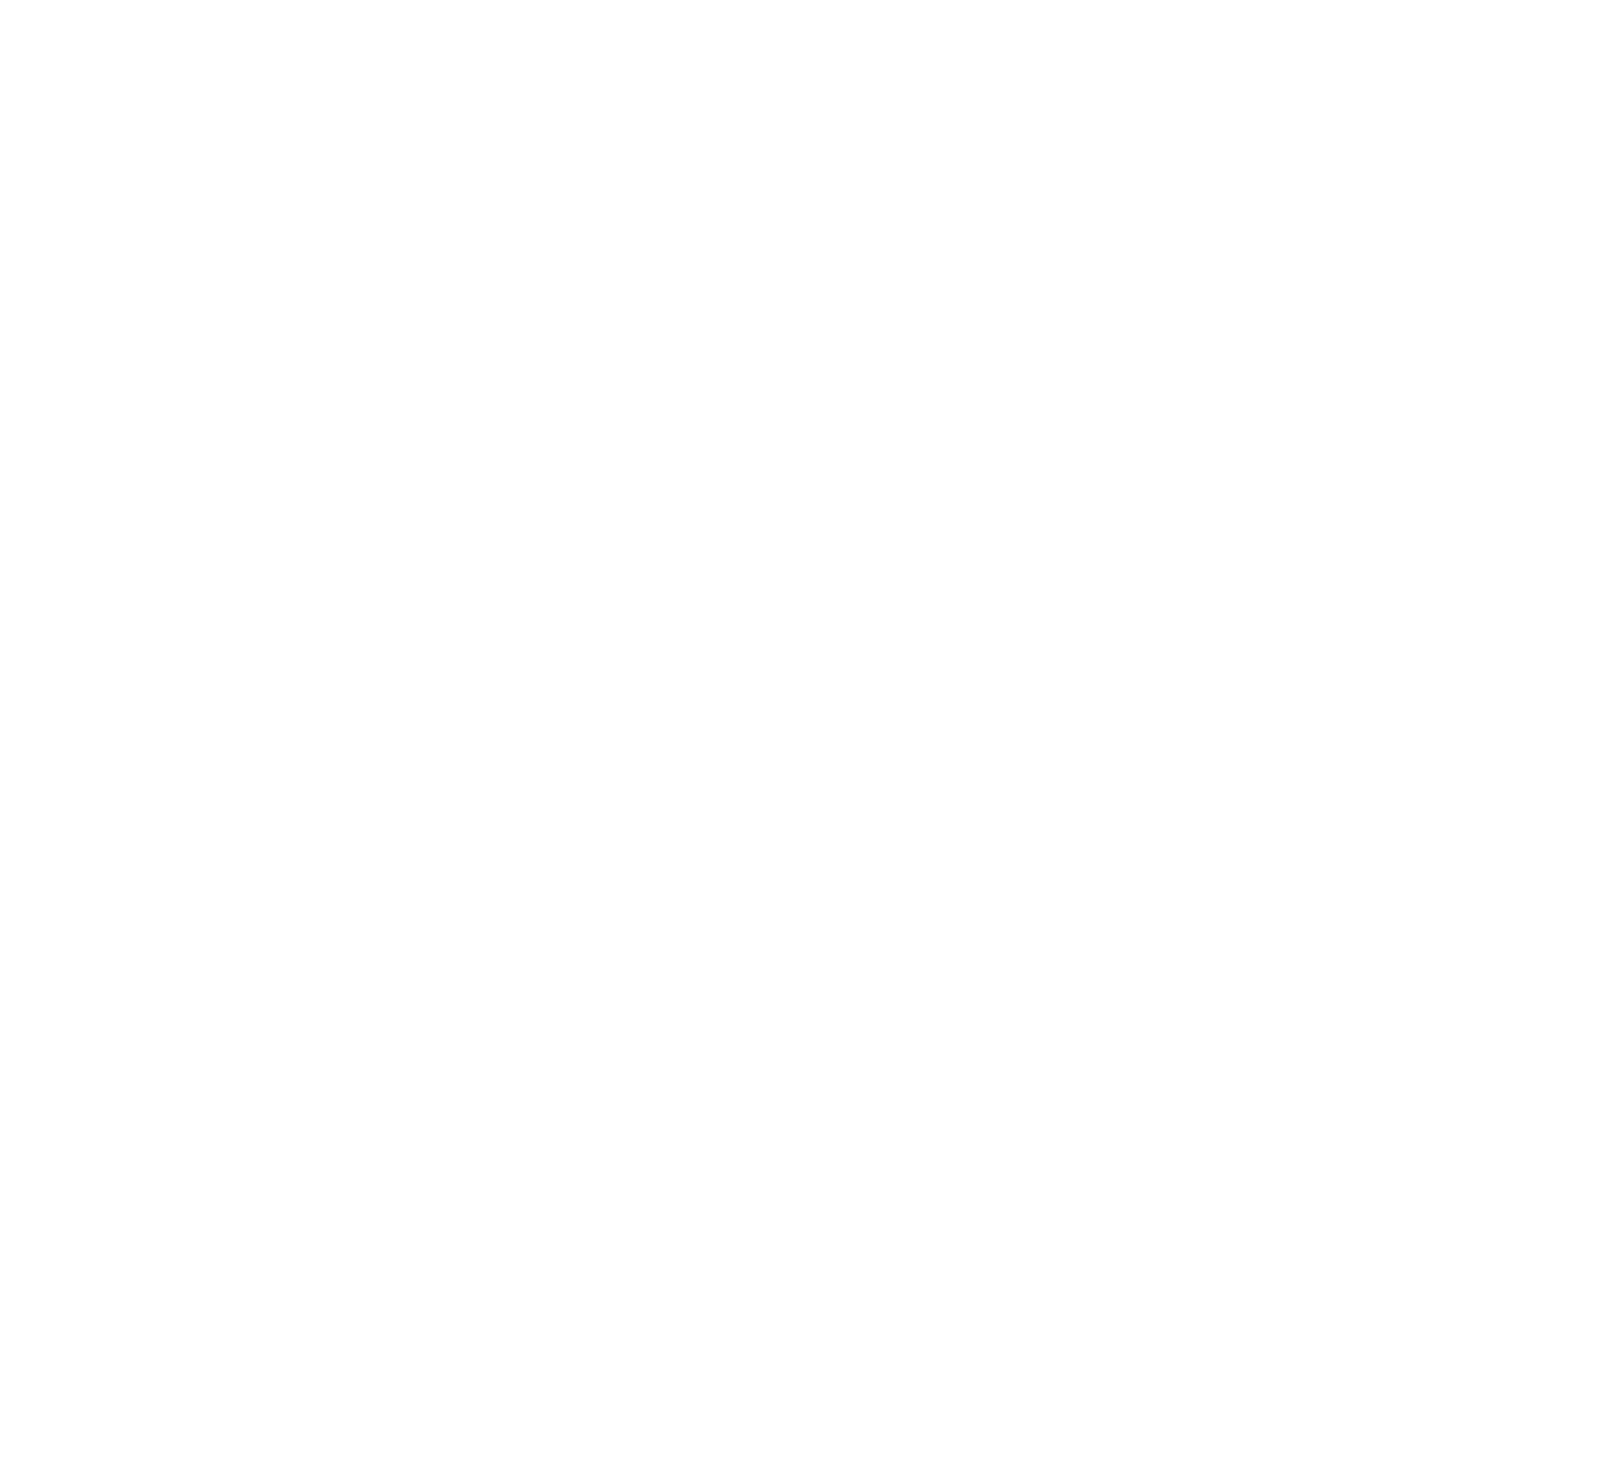 Ourpalm logo pour fonds sombres (PNG transparent)